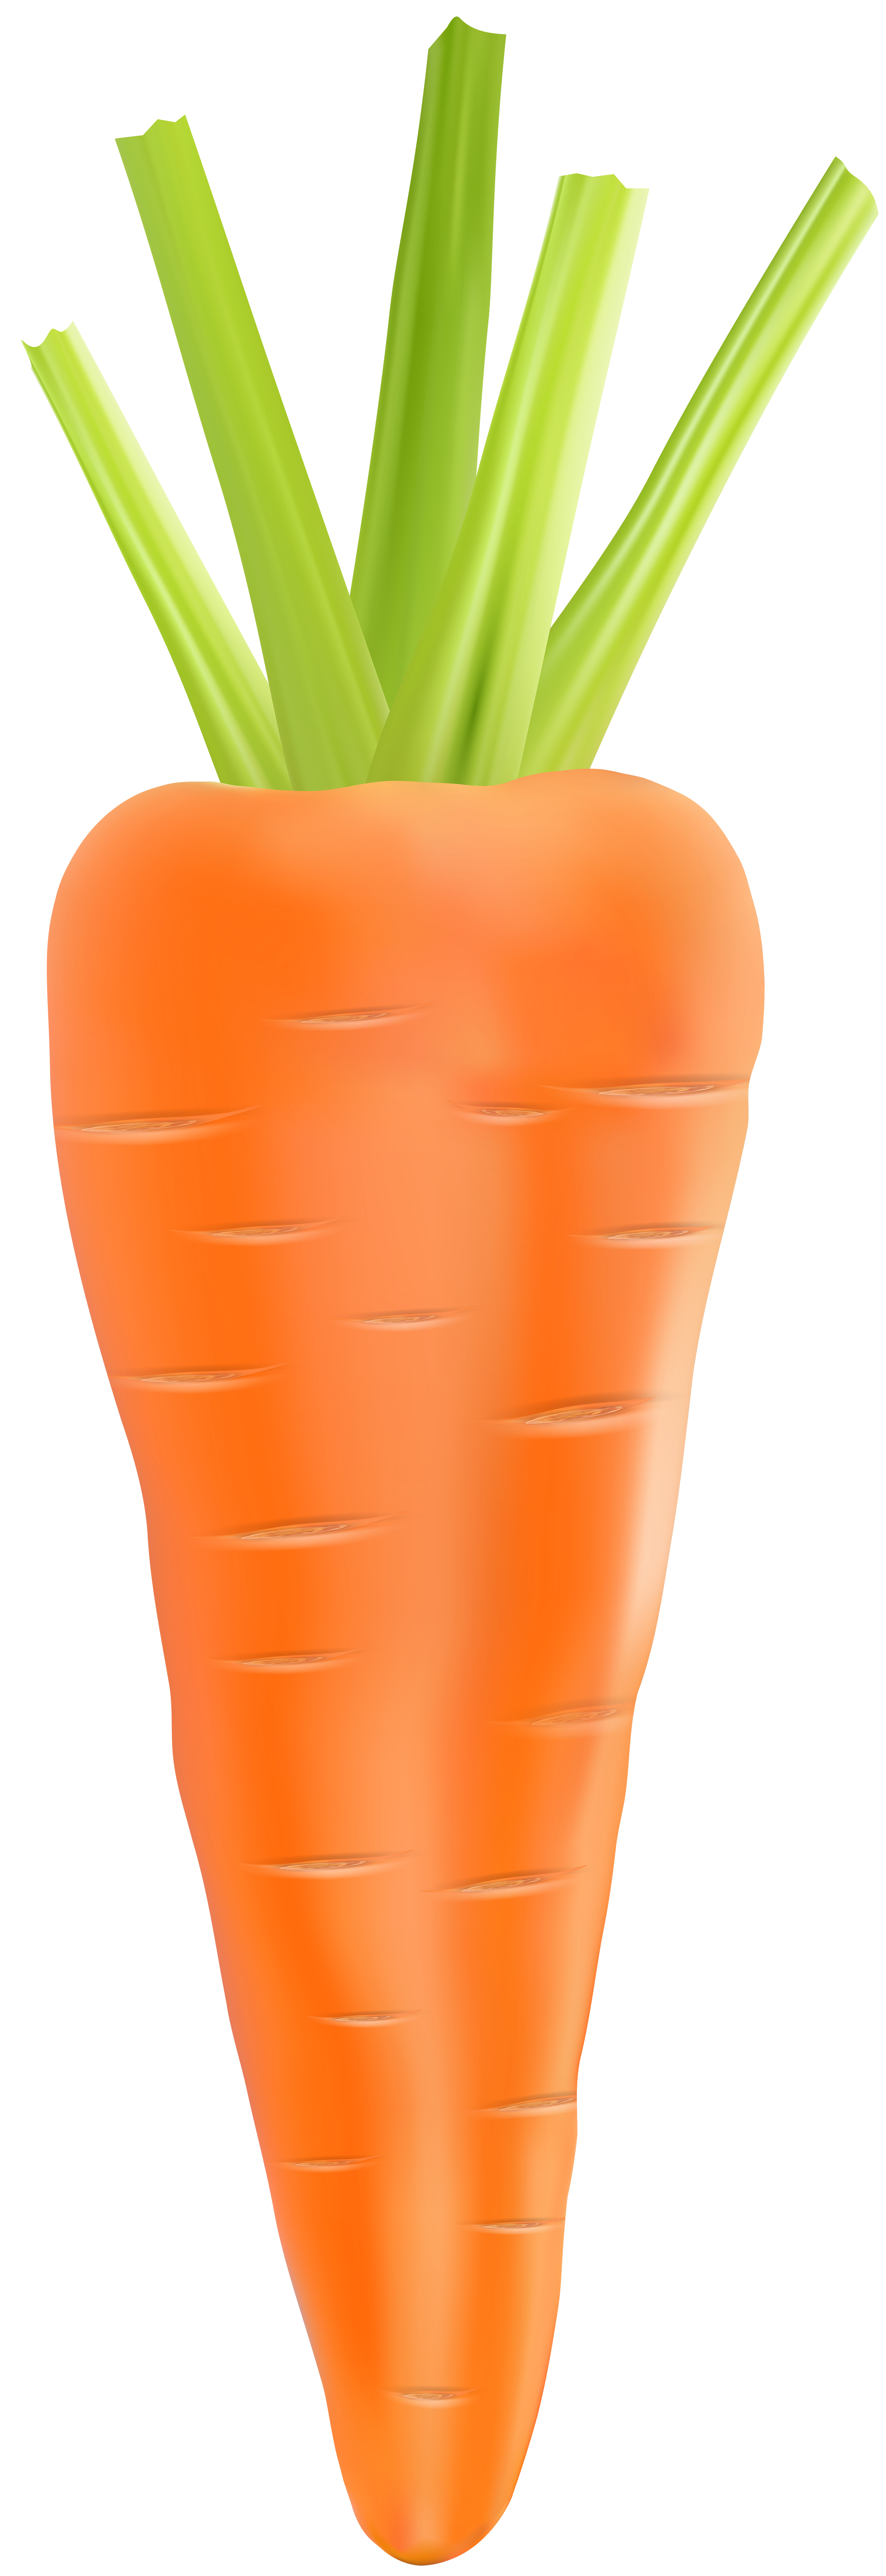 Transparent png clip art. Clipart vegetables carrot